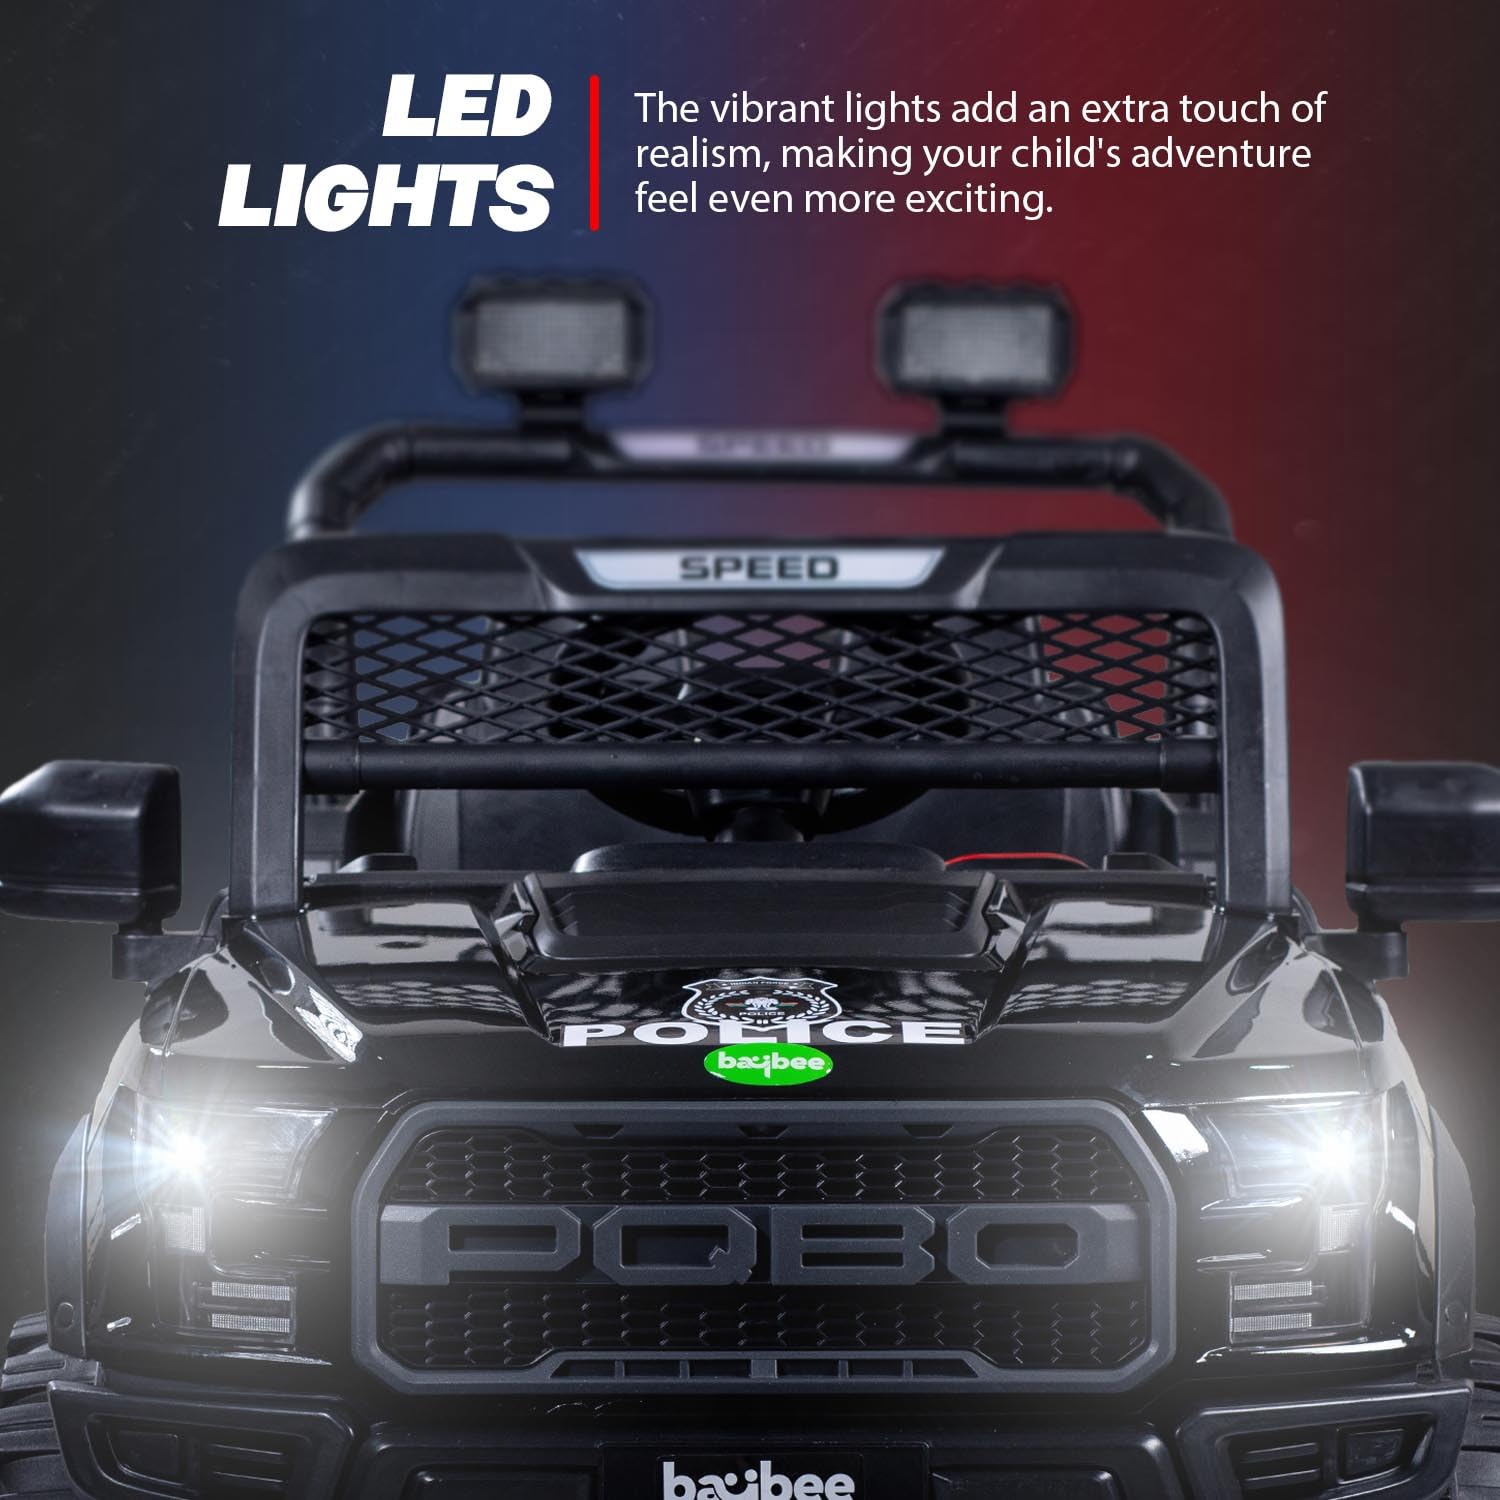 Minikin Pobo Kids Electric Rechargeable Jeep | LED Head Lights & Music | 1-7 Years